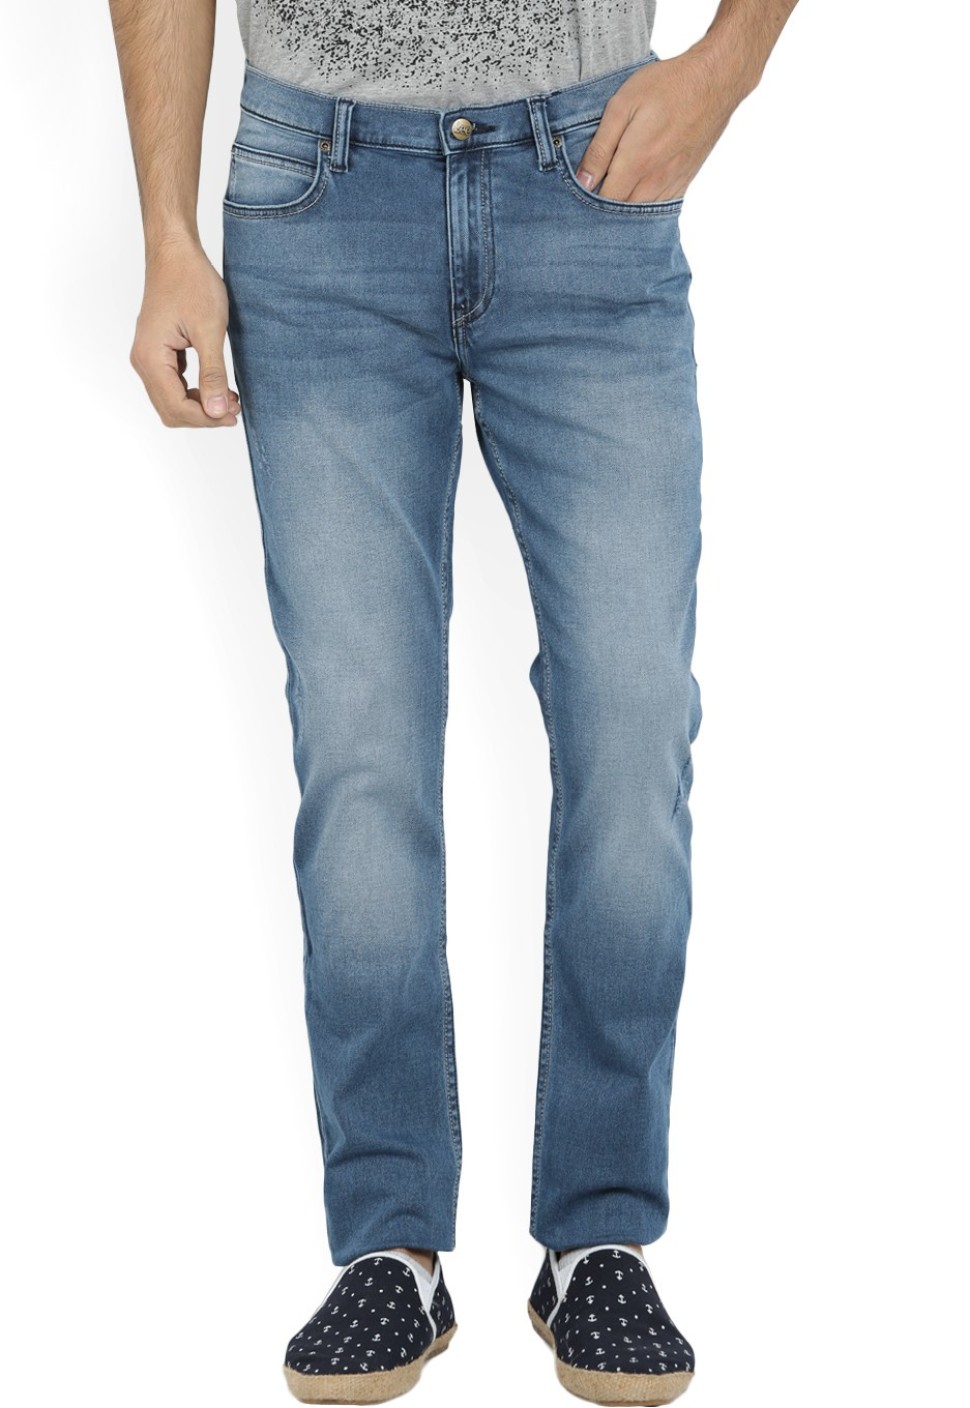 Lee Skinny Men's Blue Jeans - Buy JSW-INDIGO Lee Skinny Men's Blue ...